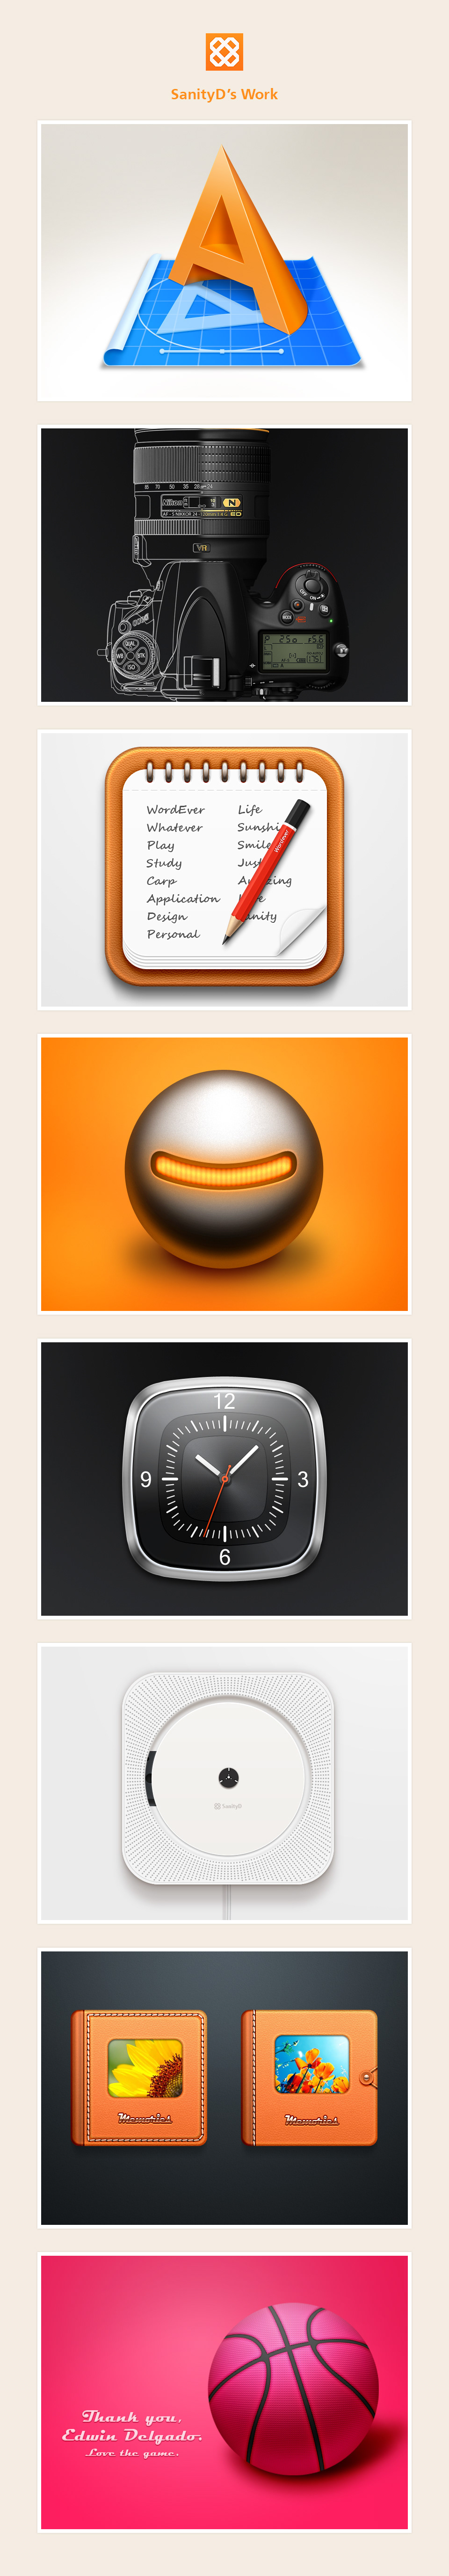 icons apps design sanityd 